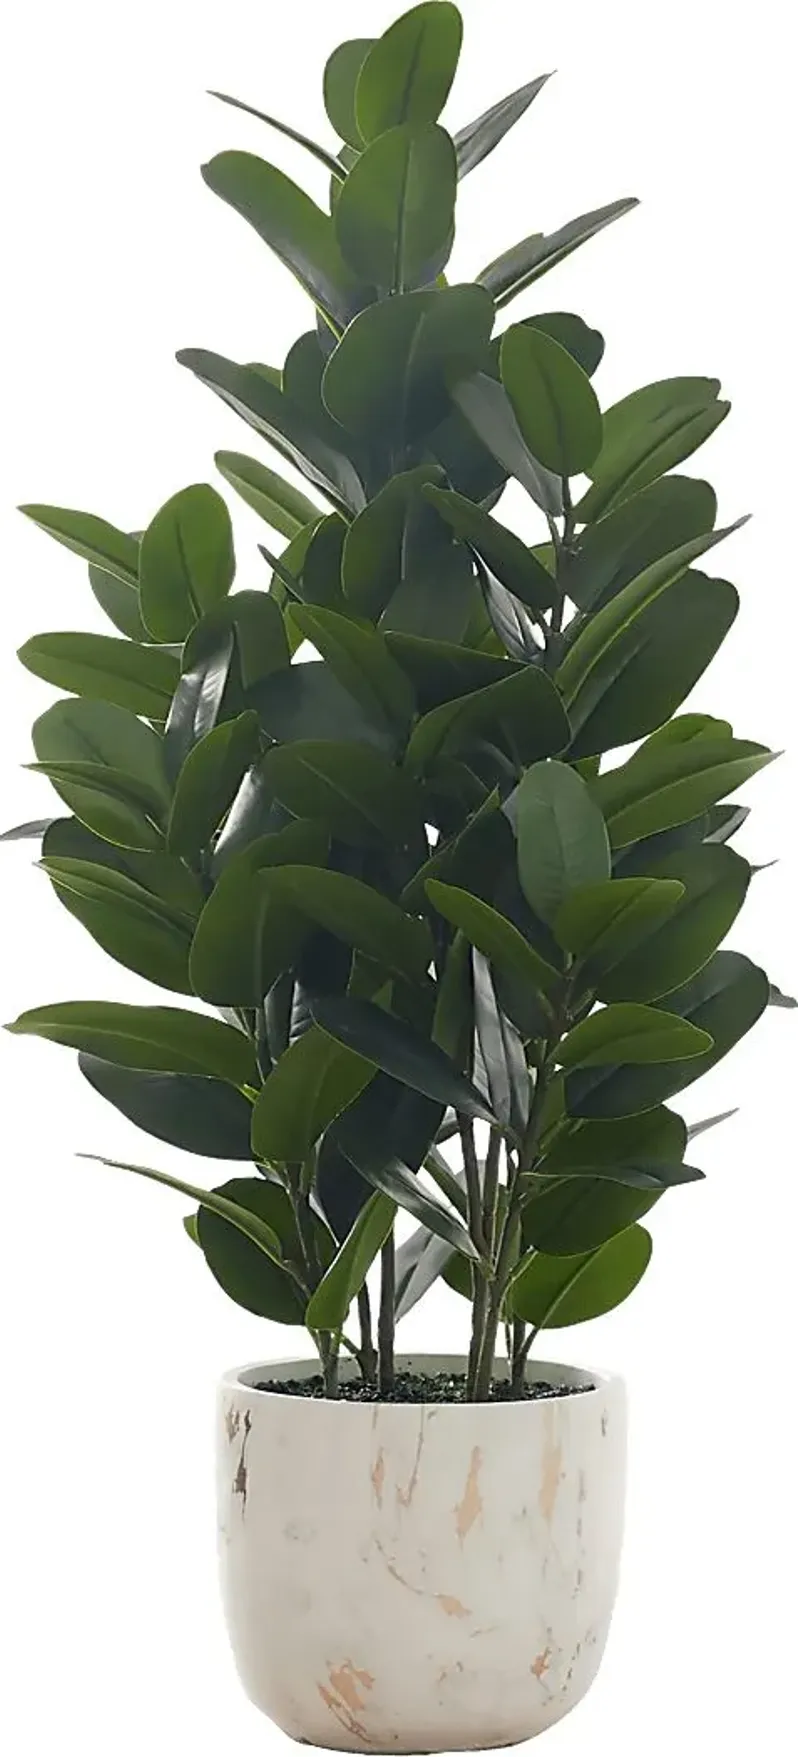 Achene Green Artificial Garcienia Tree